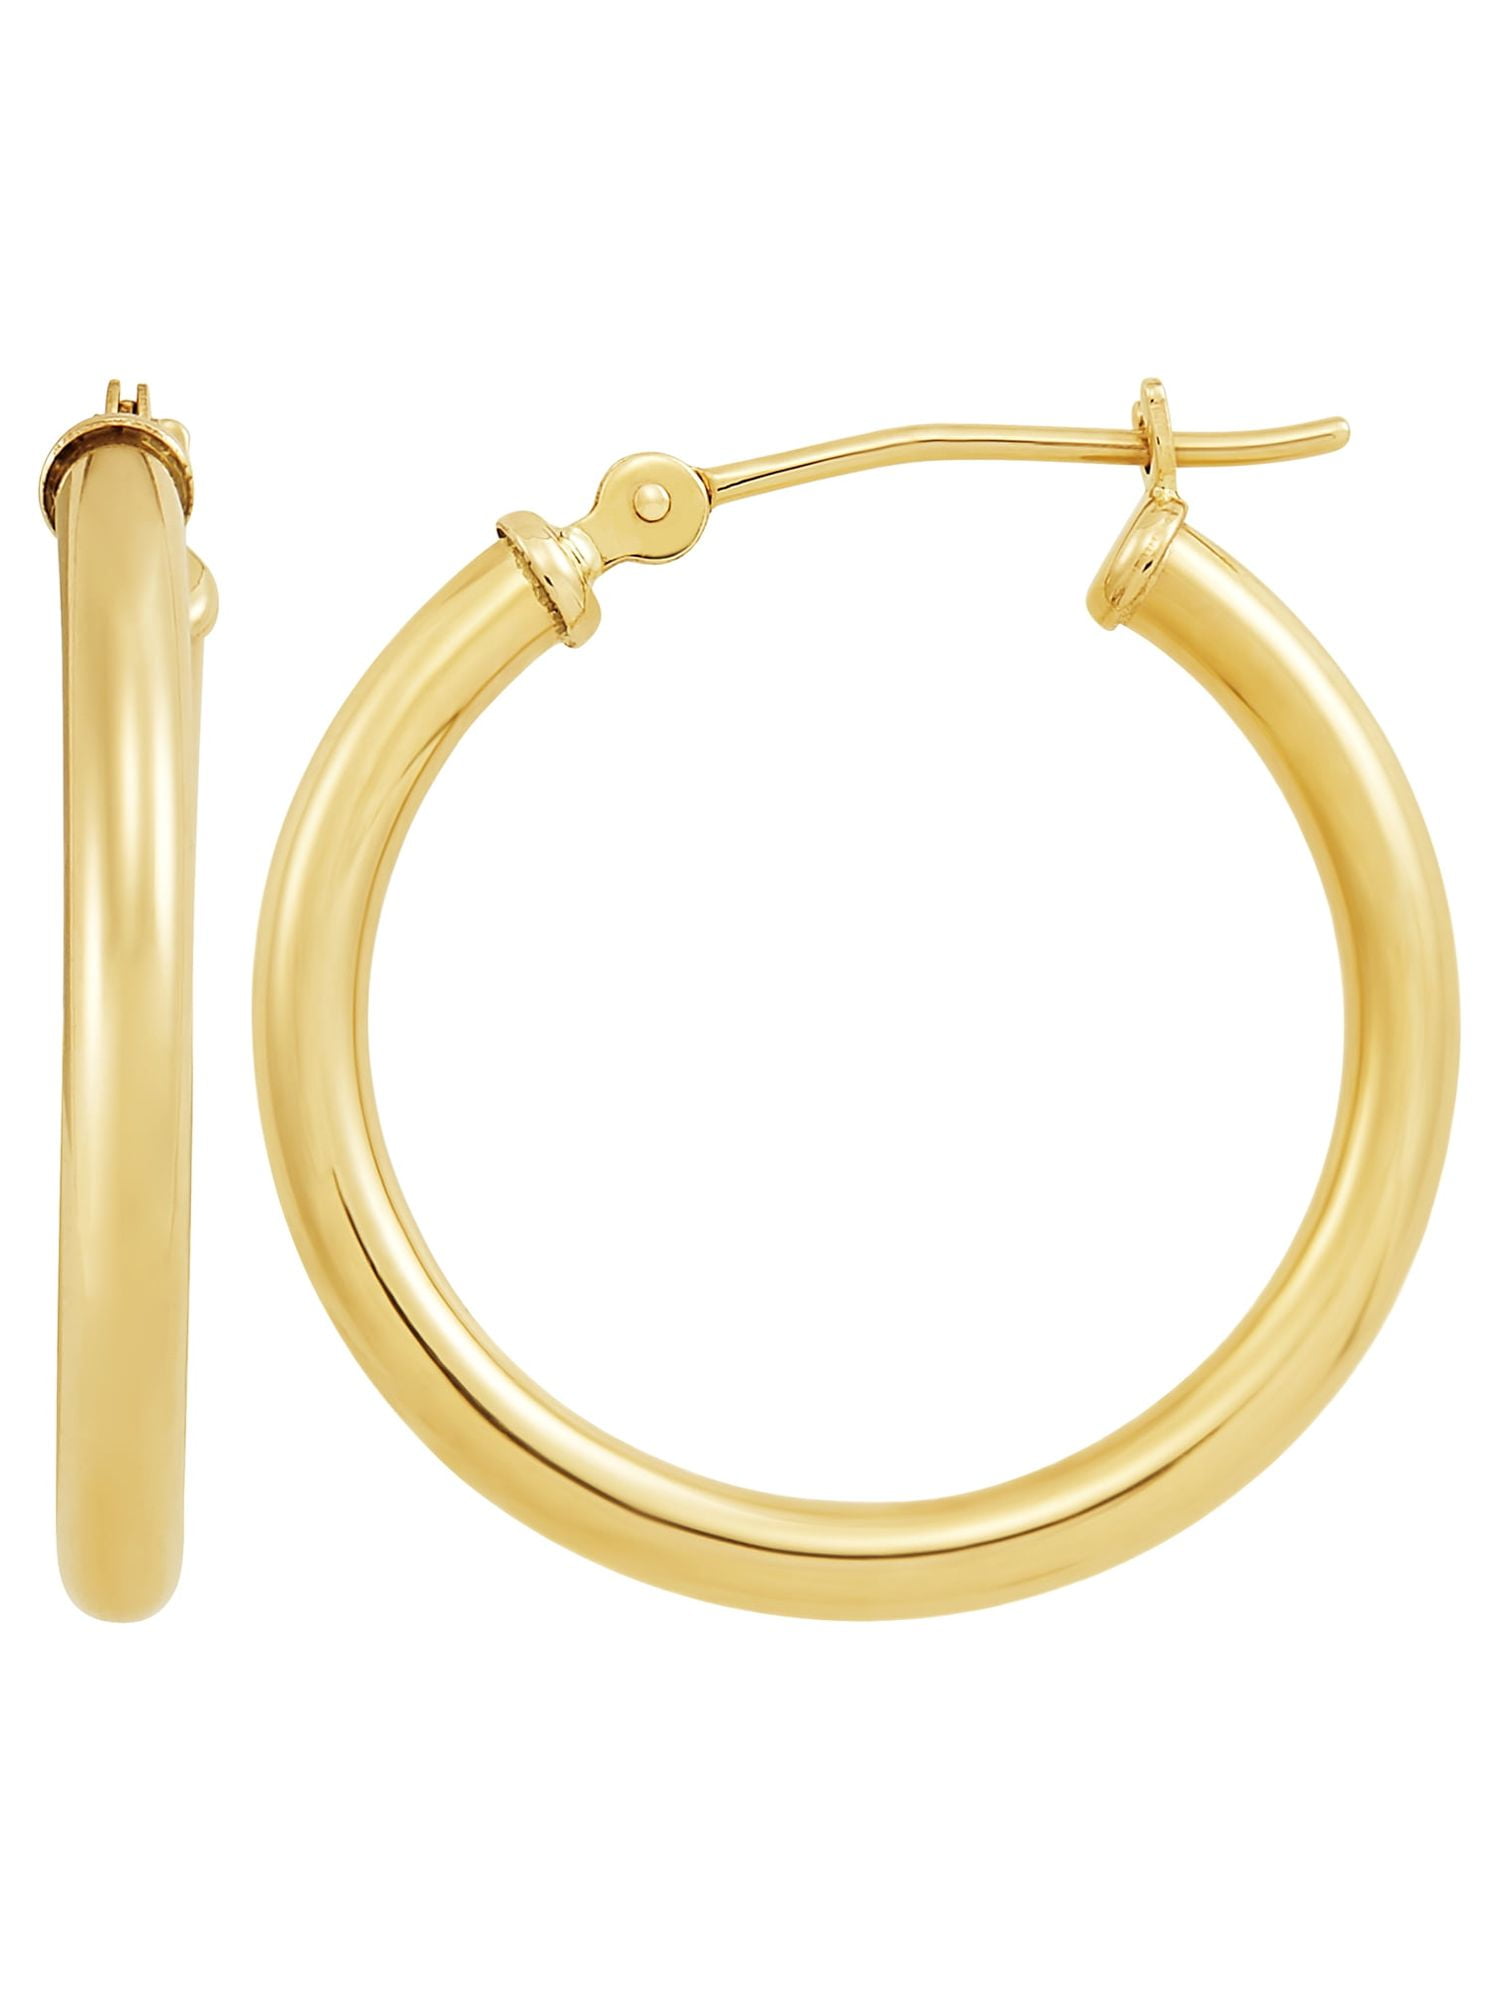 14k White Gold Curved Tear Drop Wire Earrings - 1.5 Grams